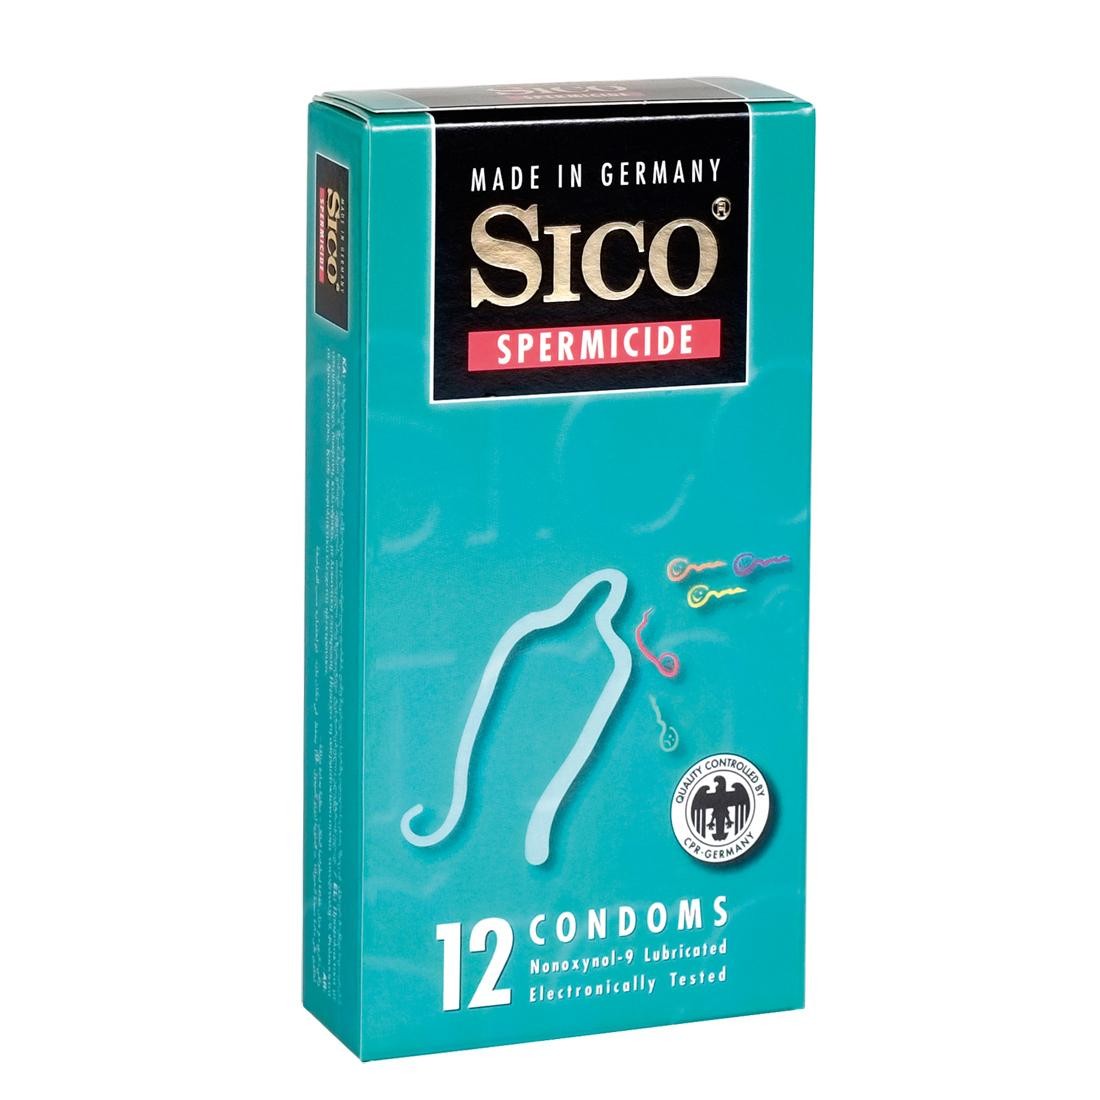  SICO  Spermicide  12er  -  Kondome 